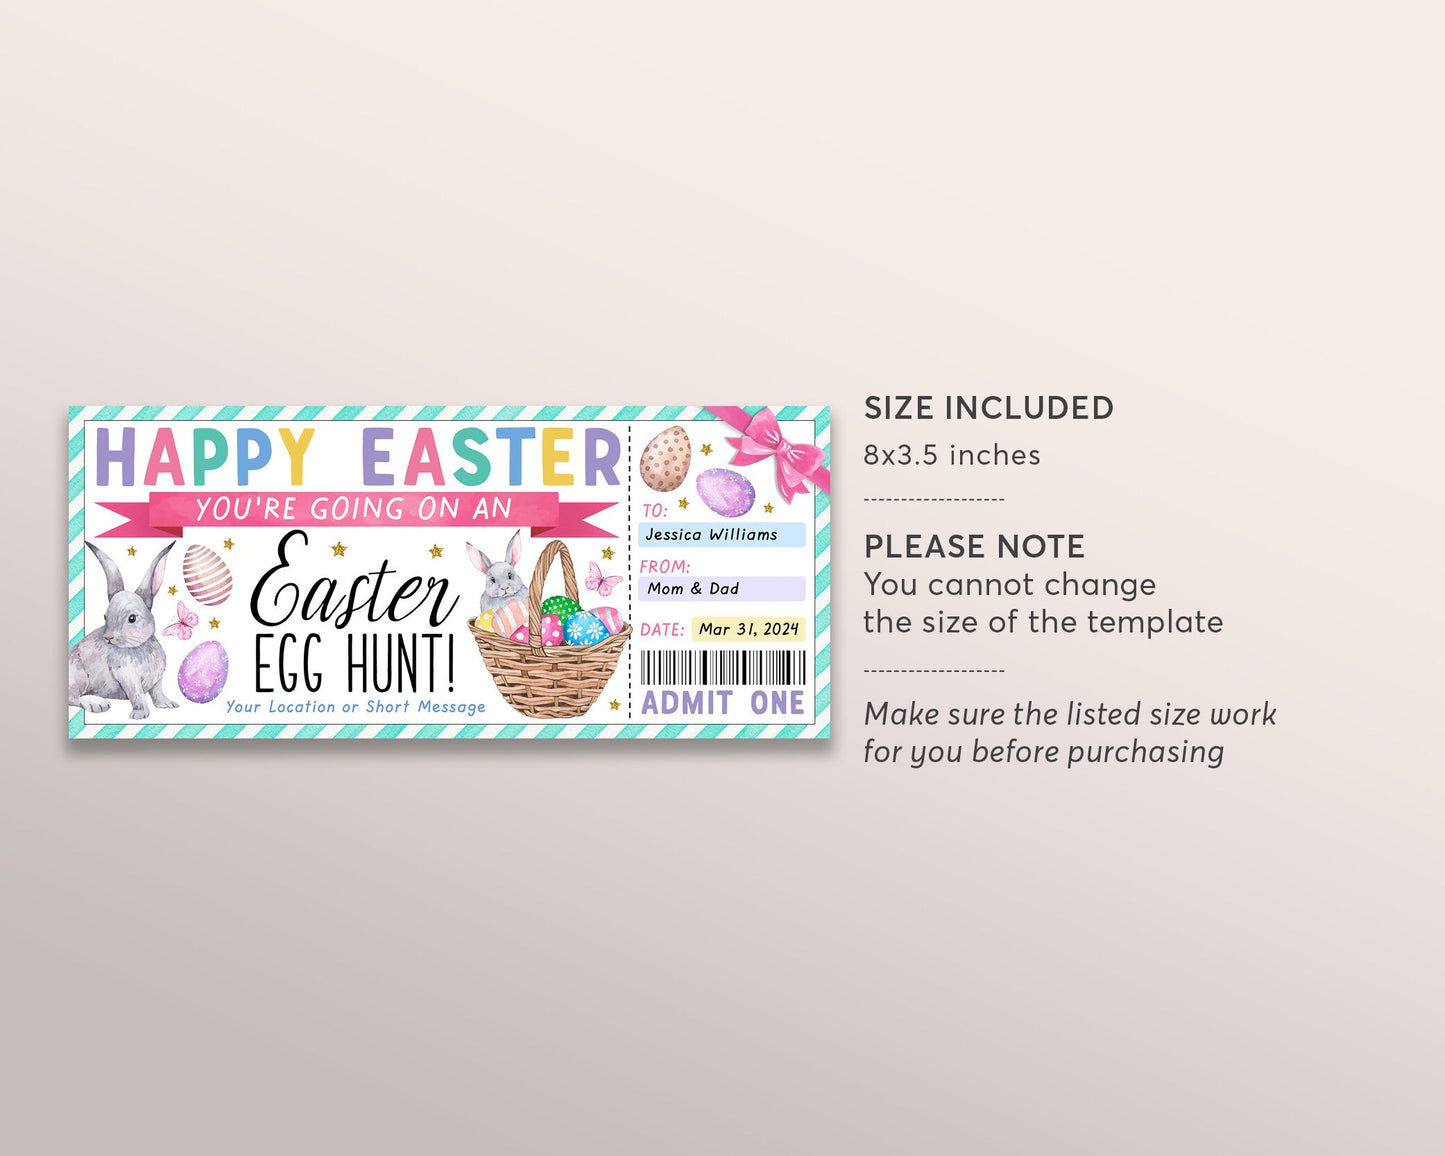 Easter Egg Hunt Ticket Editable Template, Surprise Easter Egg Hunt Gift Voucher For Kids Family Friends, Easter Party Invite Reveal Coupon